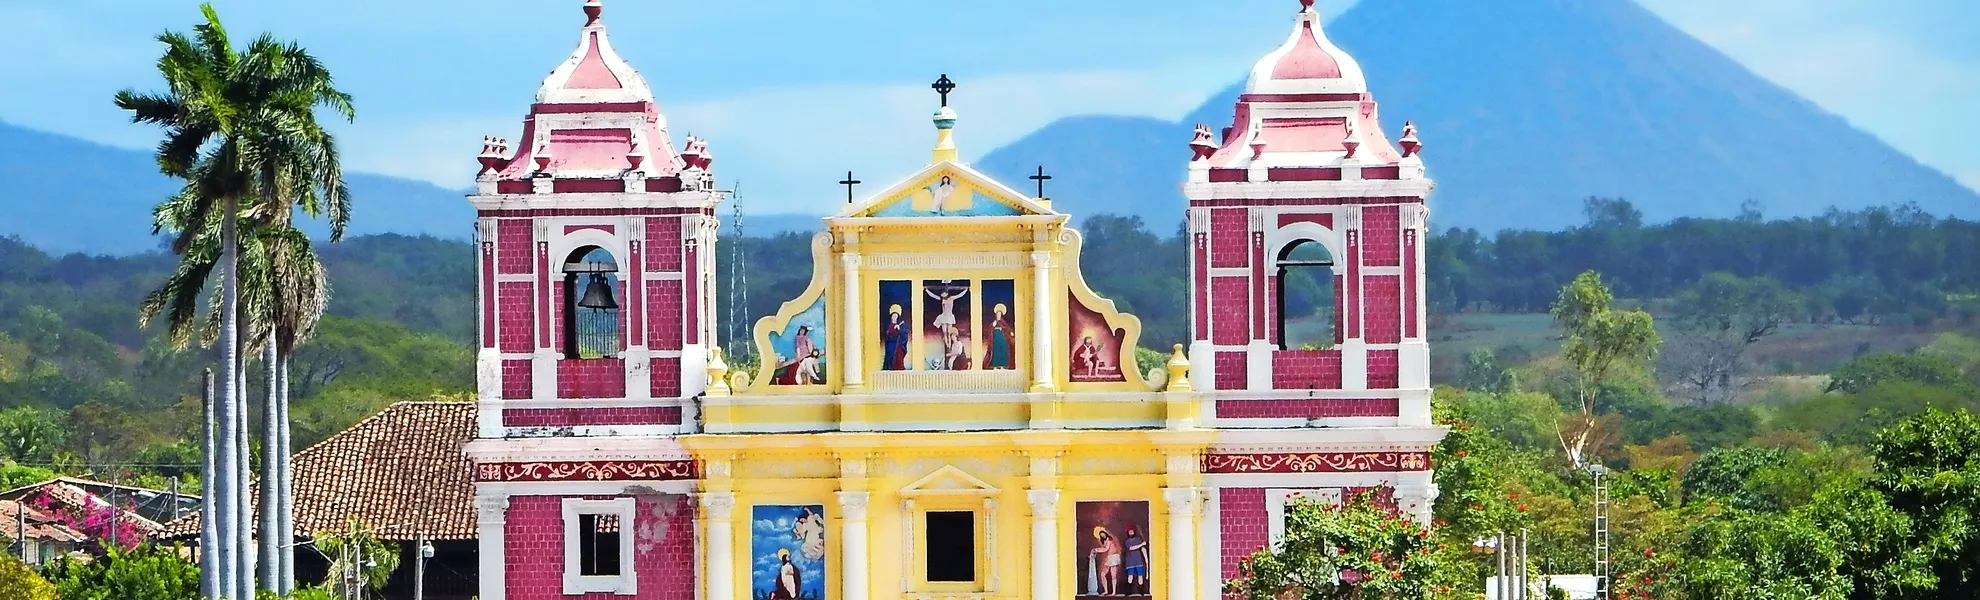 Iglesia el Calvario in León, Nicaragua - © Pixeltheater - stock.adobe.com